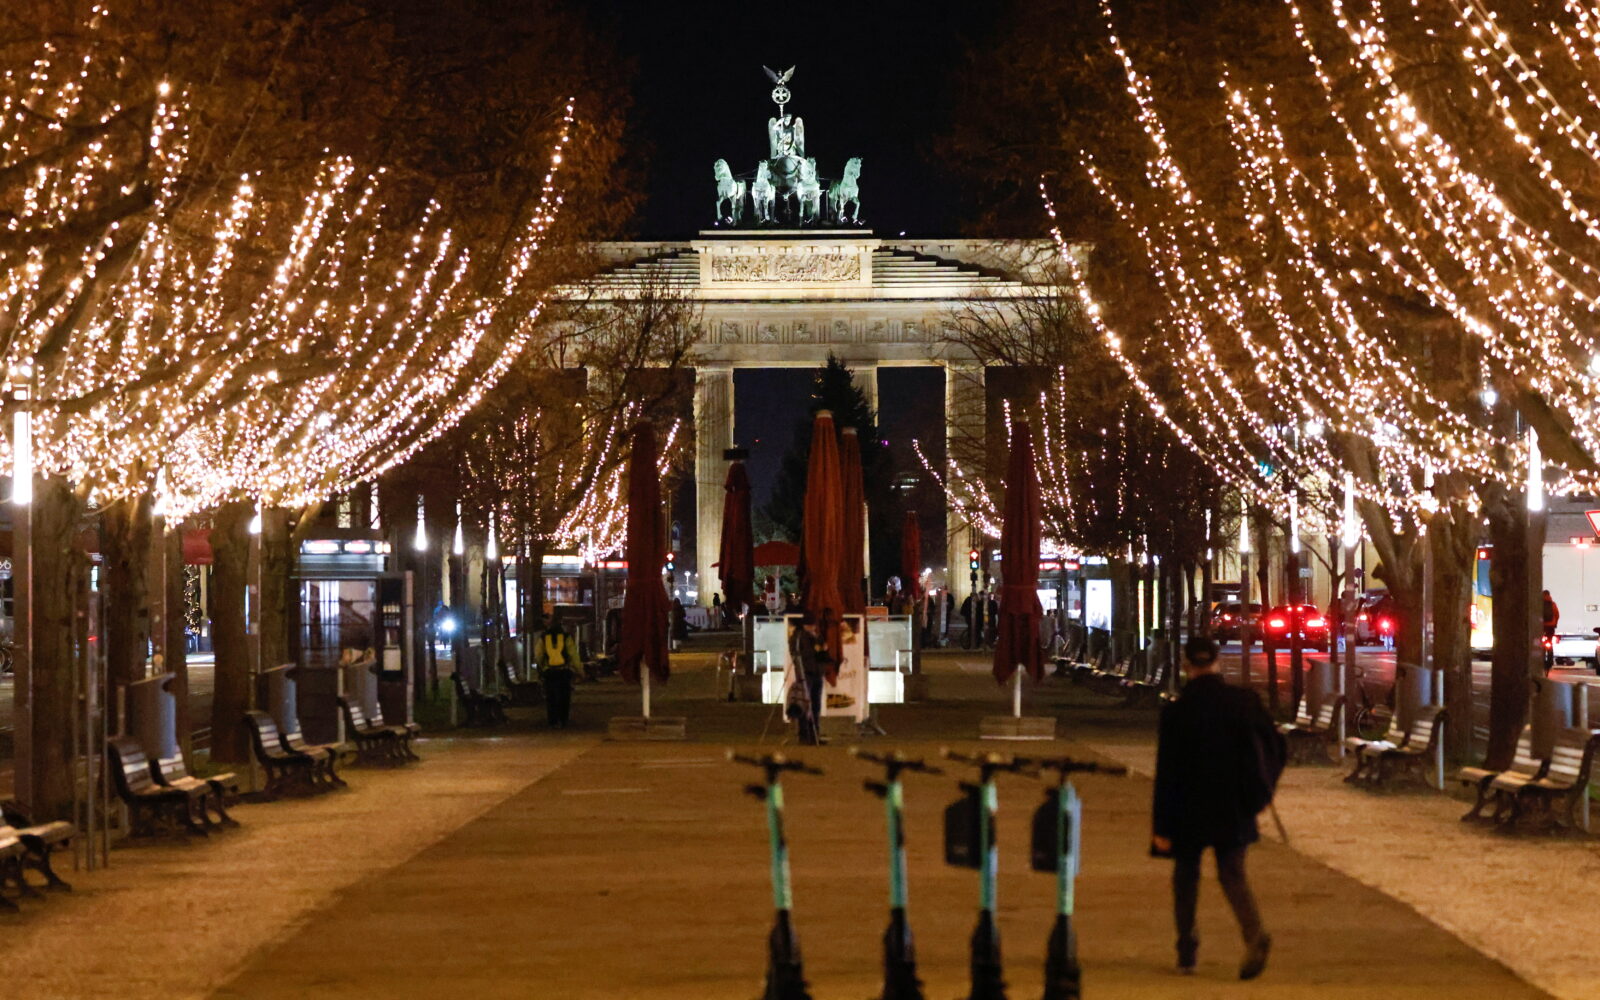 Njemačka produljuje lockdown, ali planira iznimke za Božić - Poslovni dnevnik